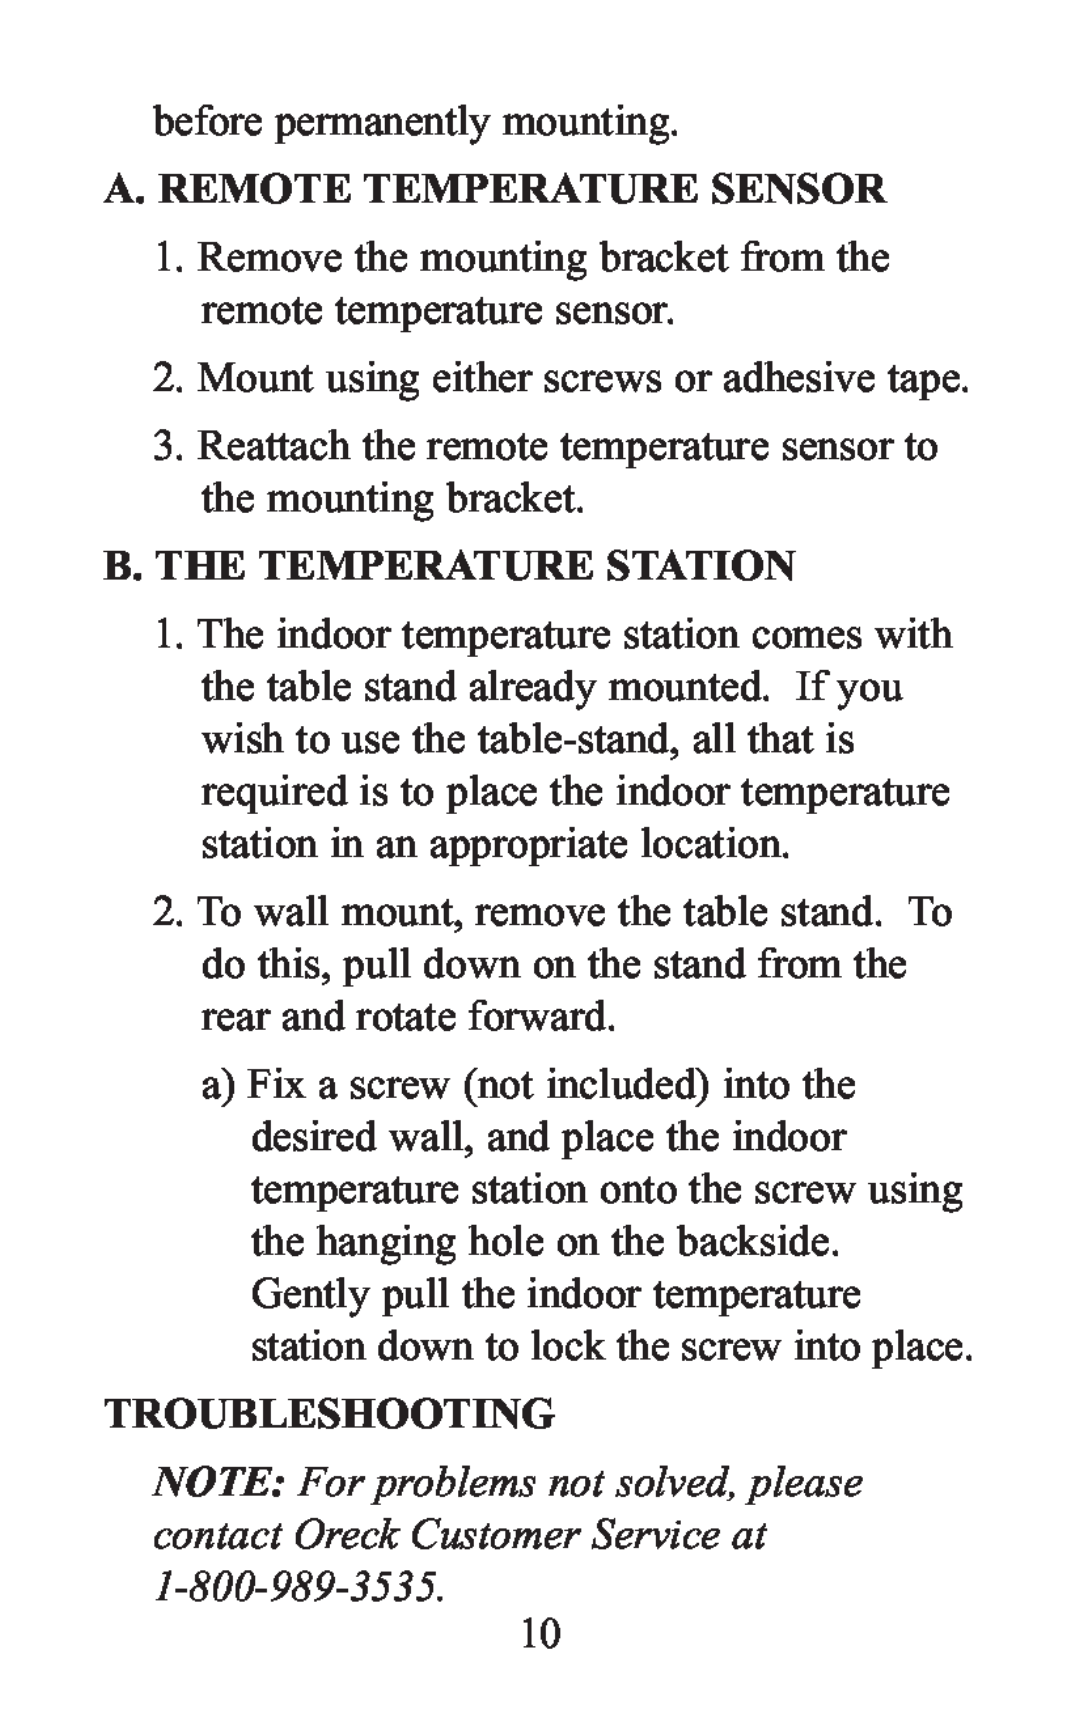 Oreck WS-7013U instruction manual A. Remote Temperature Sensor, B. The Temperature Station, Troubleshooting 